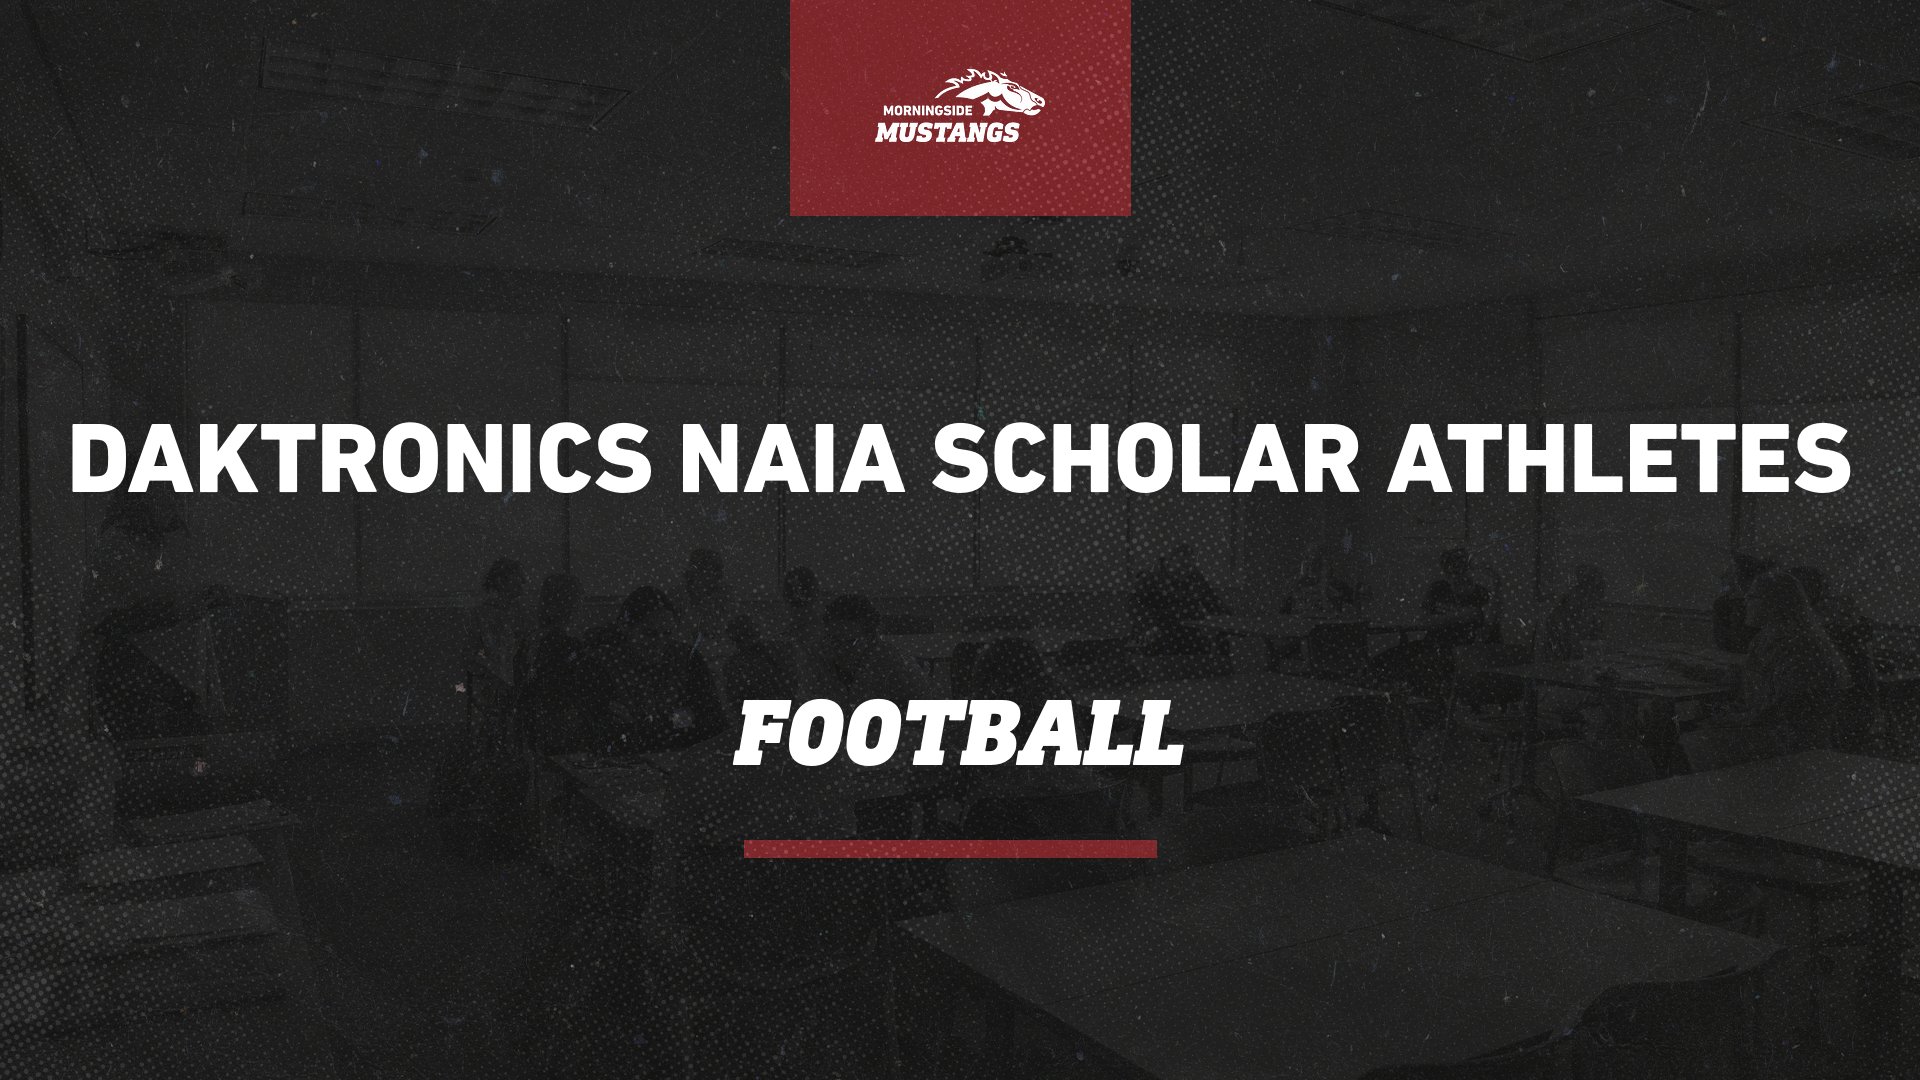 Daktronics NAIA Scholar Athletes for Football